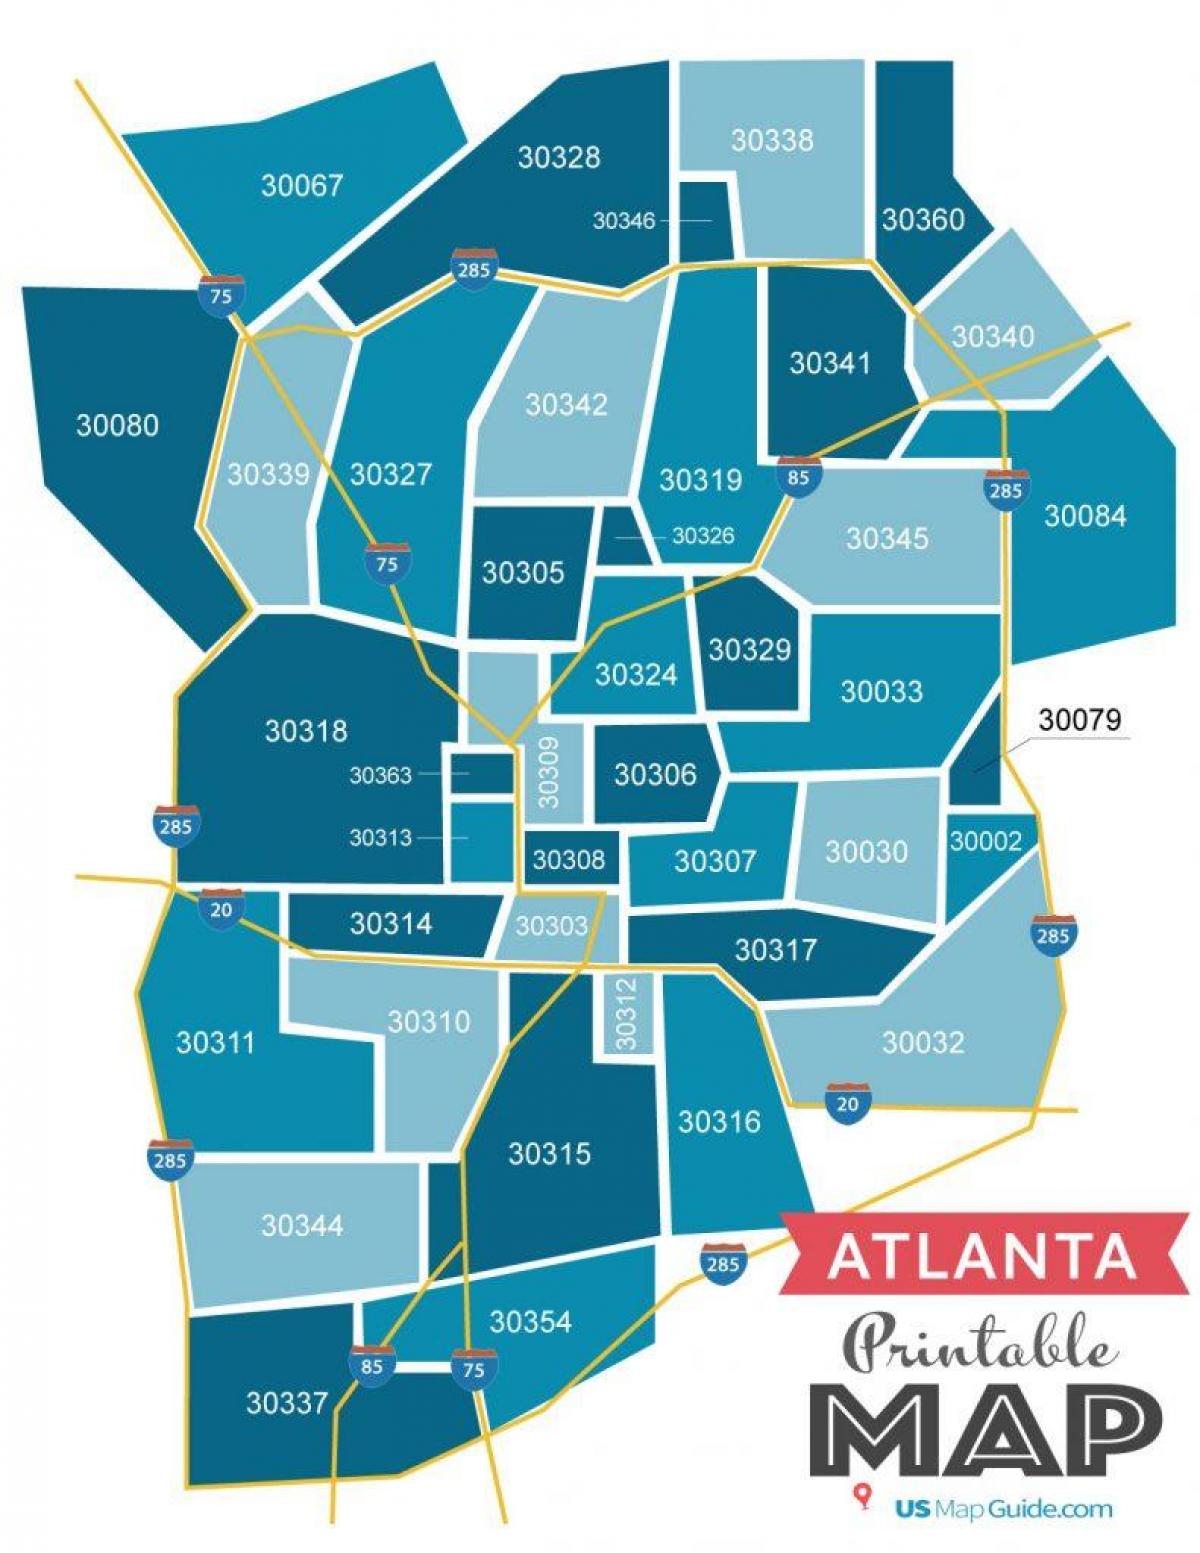 Atlanta postcode kaart